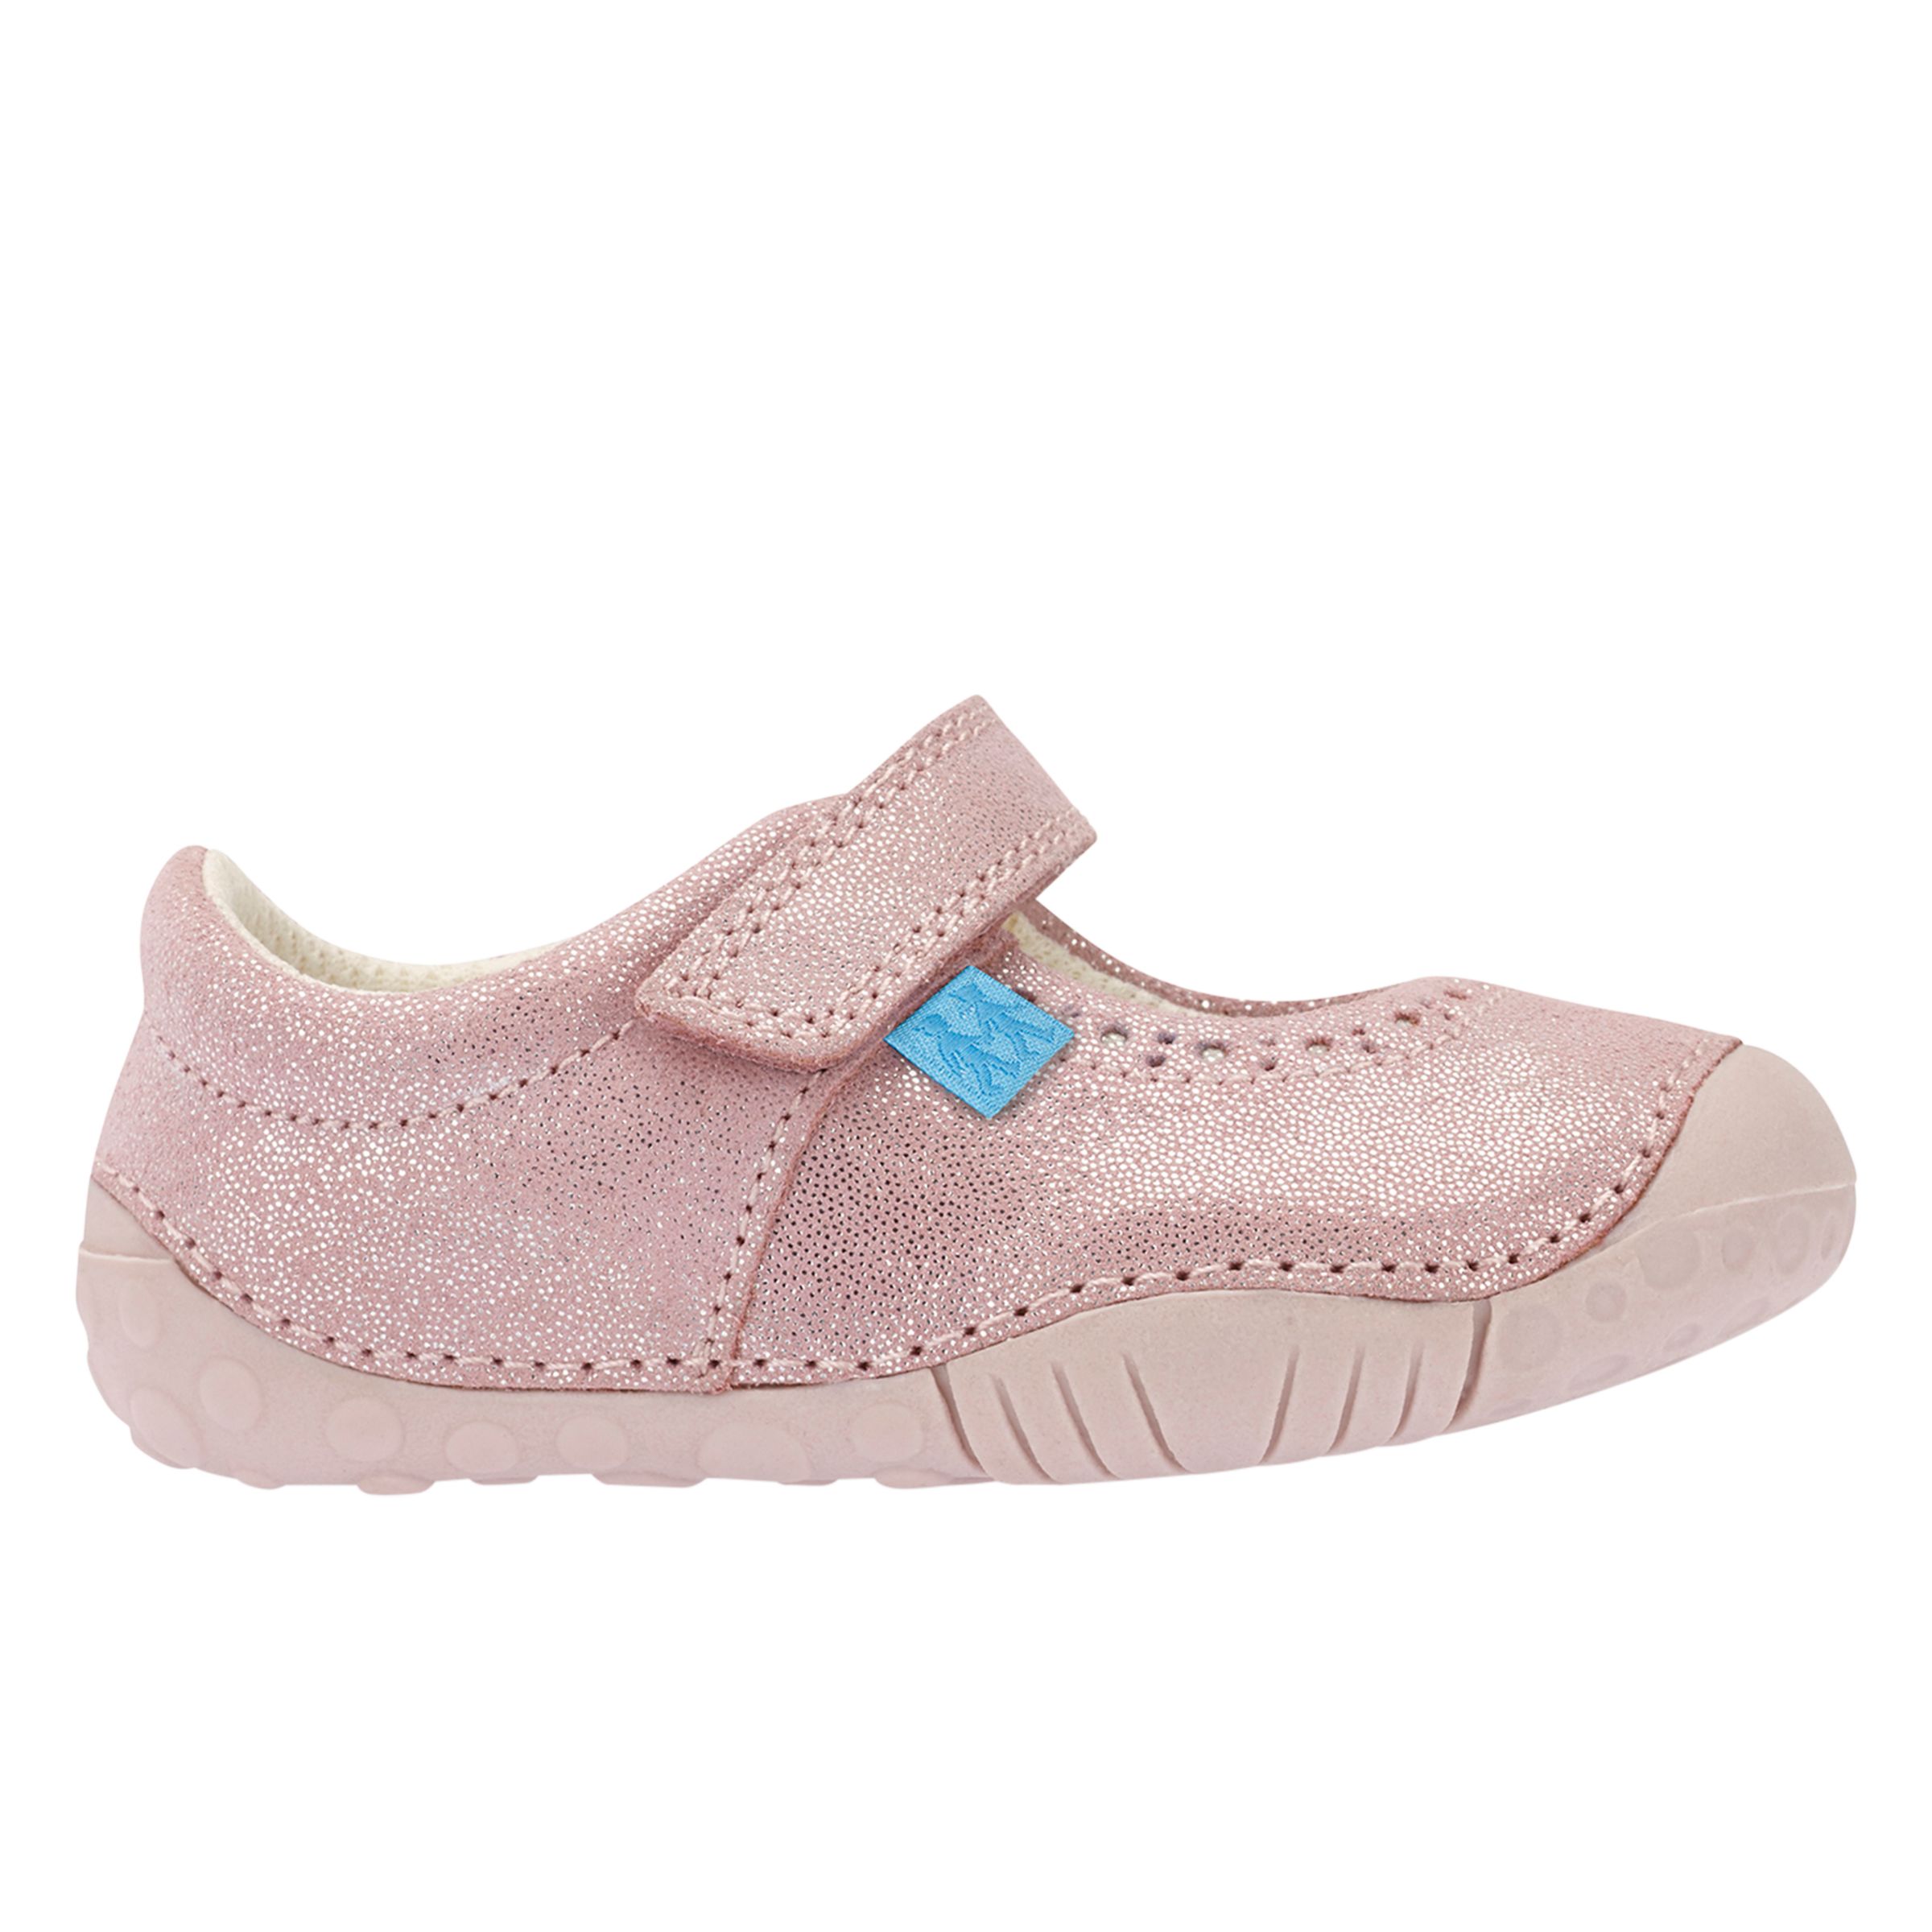 Start-Rite Children's Cruise First Shoes, Pink Metallic, 3.5G Jnr